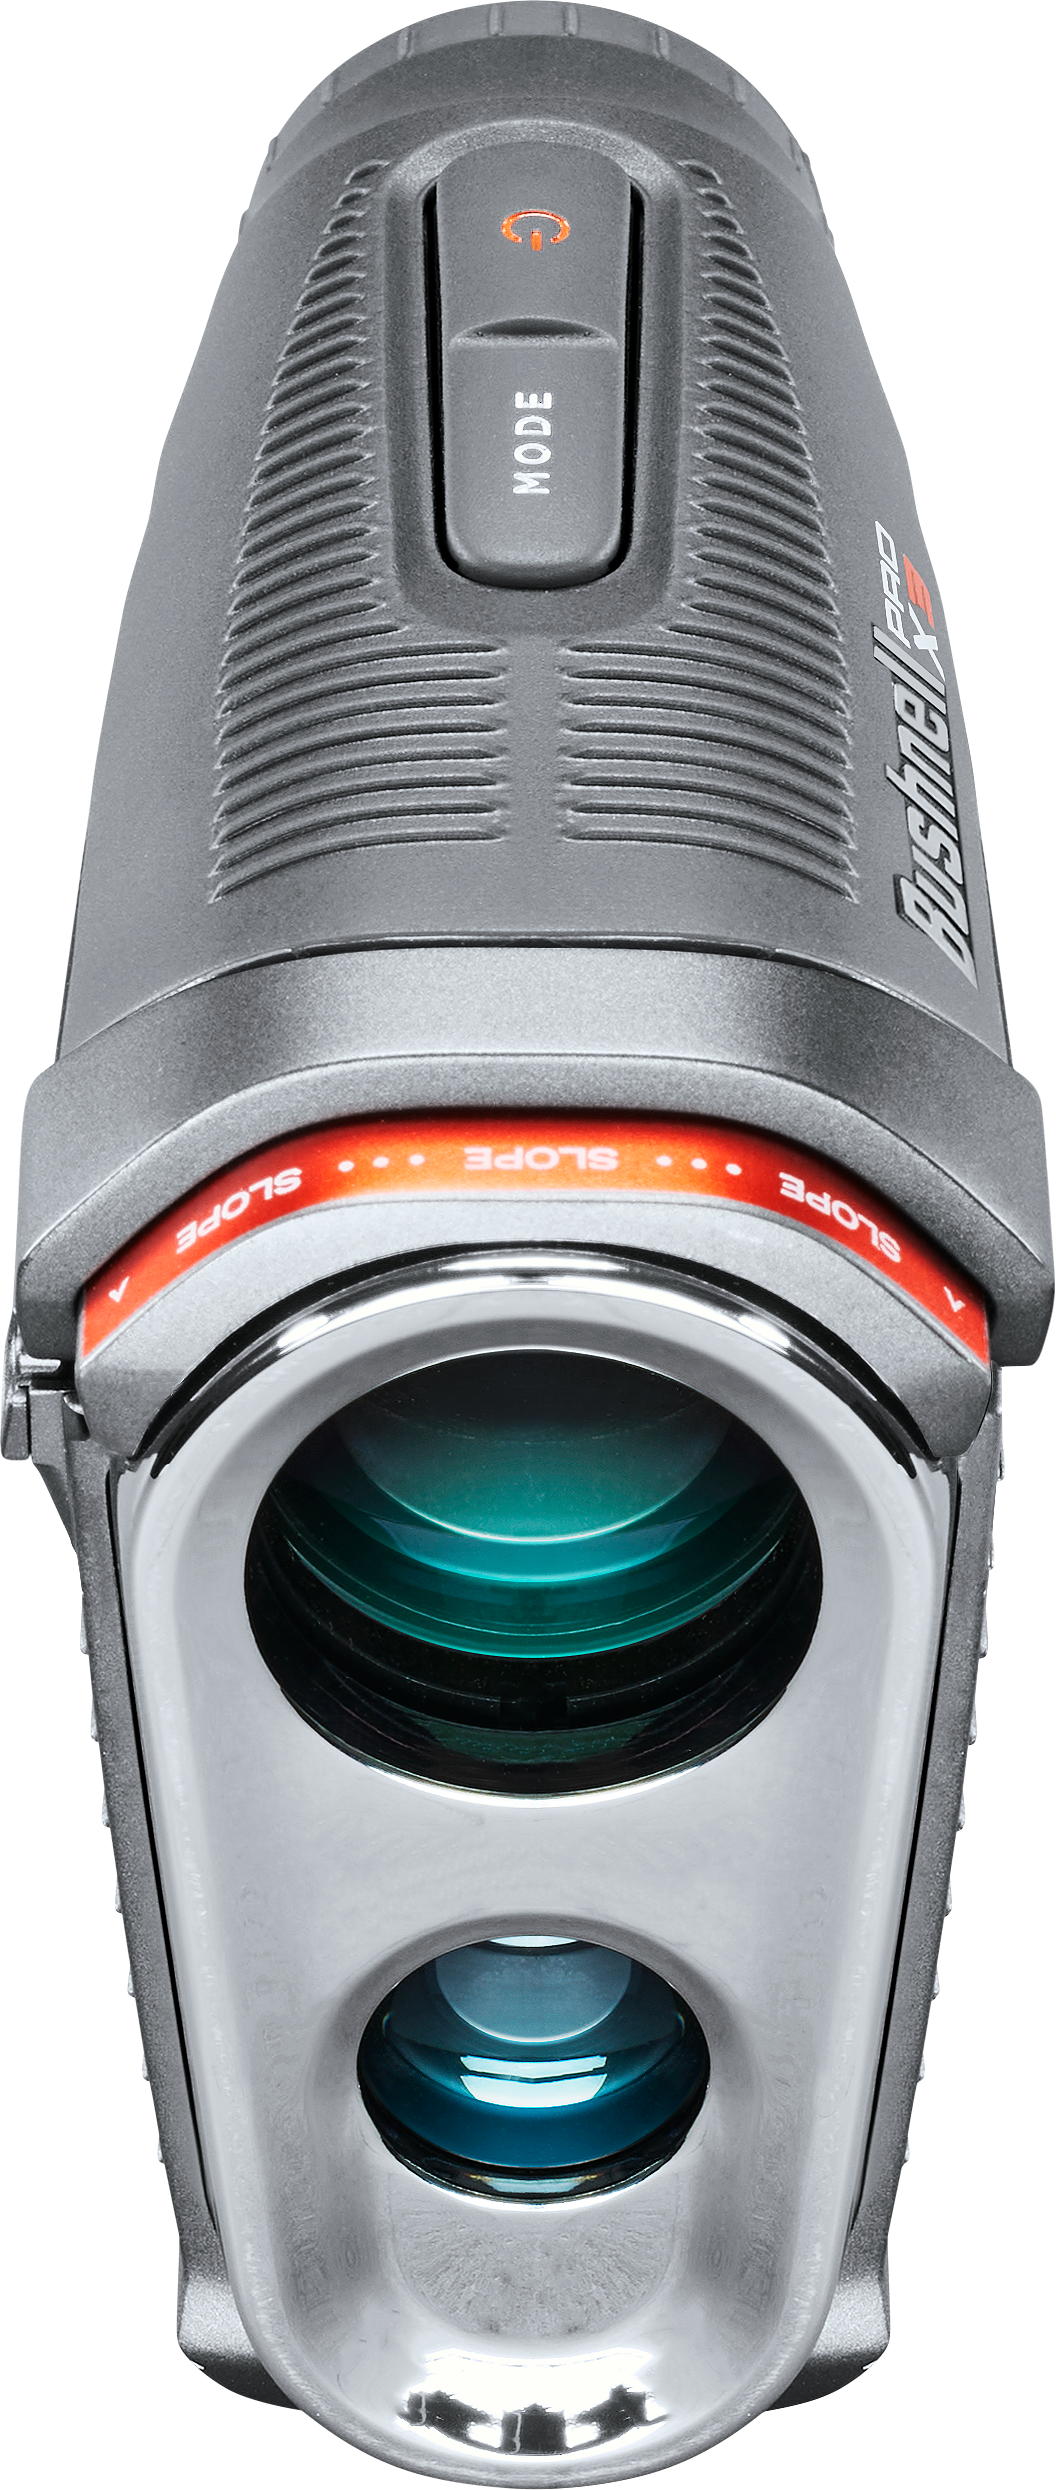 Bushnell Pro X3 Laser Entfernungsmesser